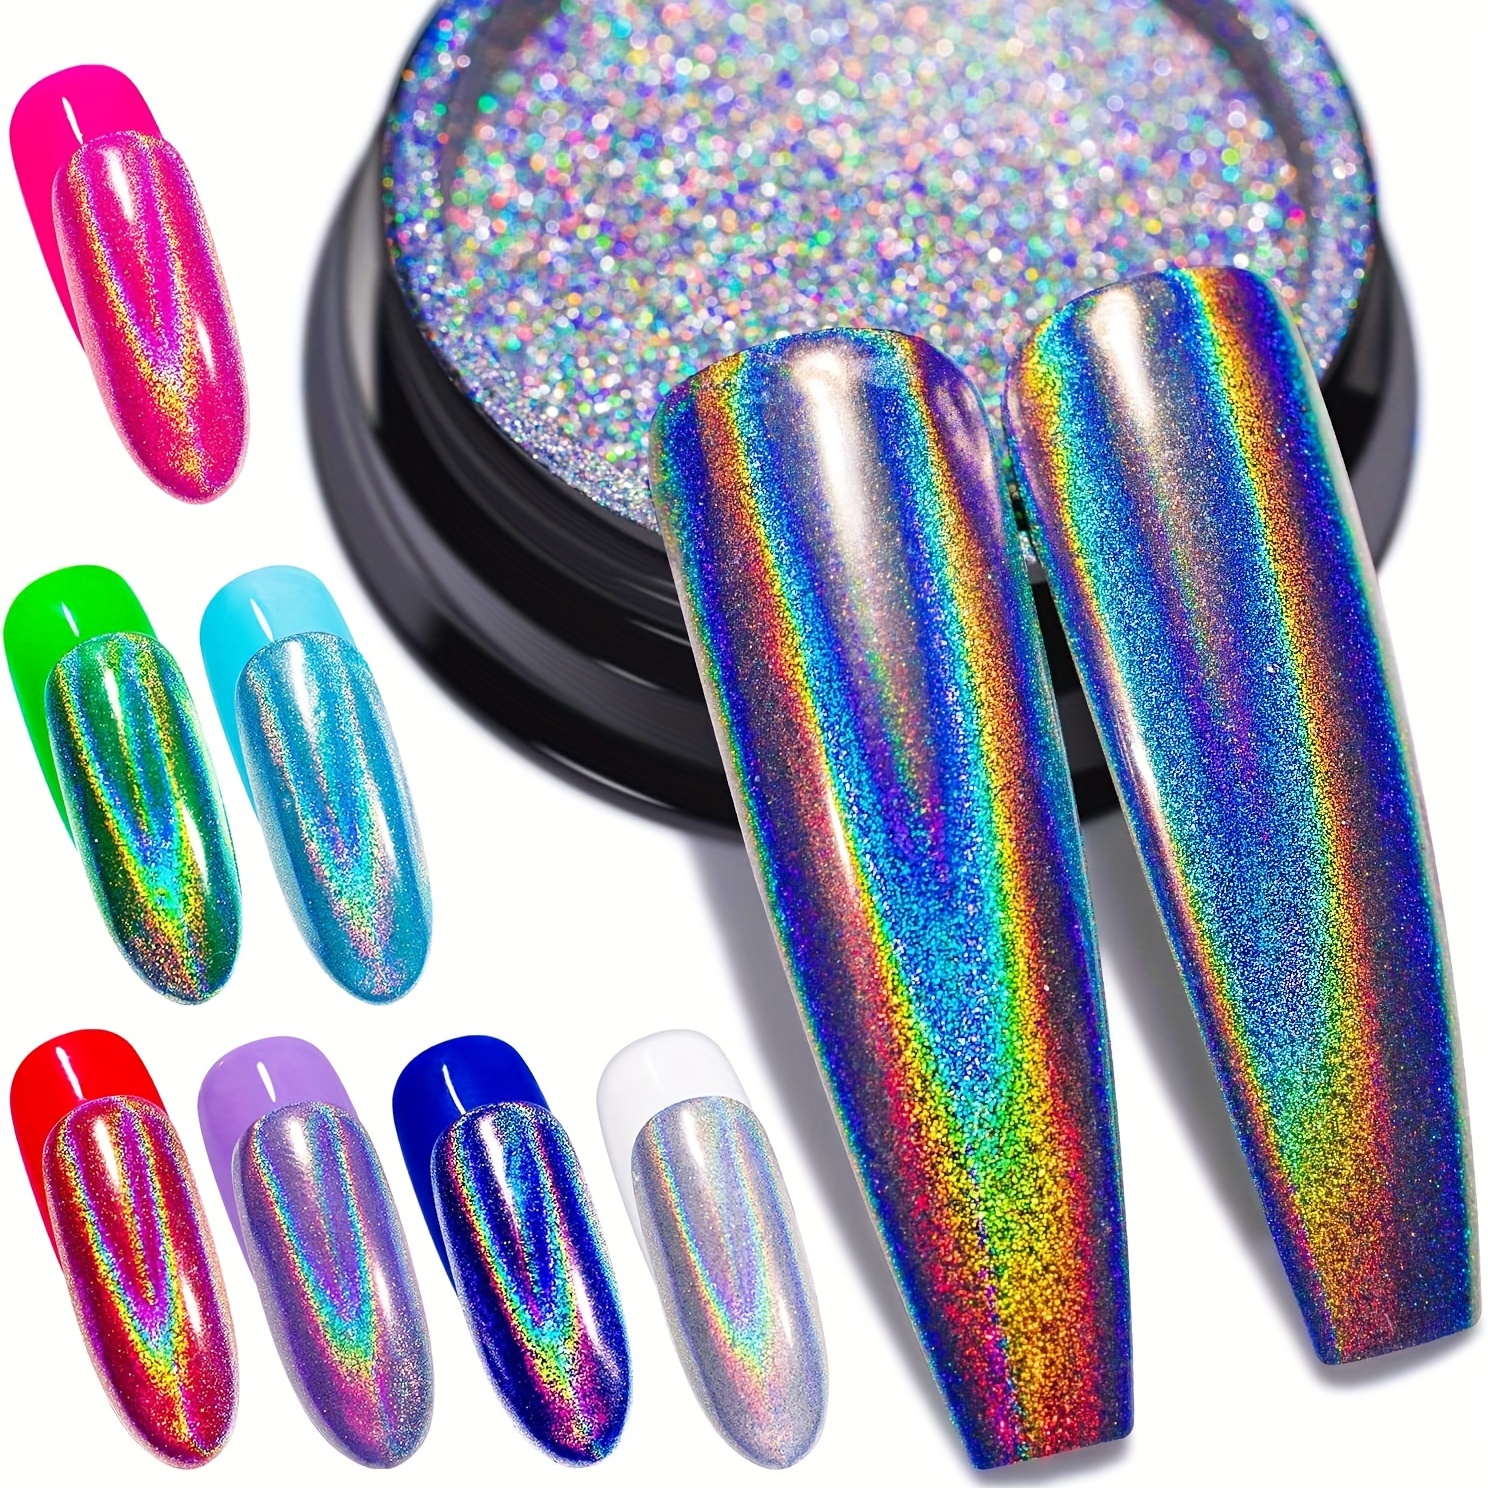 Holographic Glitter Powder Nails  Holographic Chrome Nails Powder